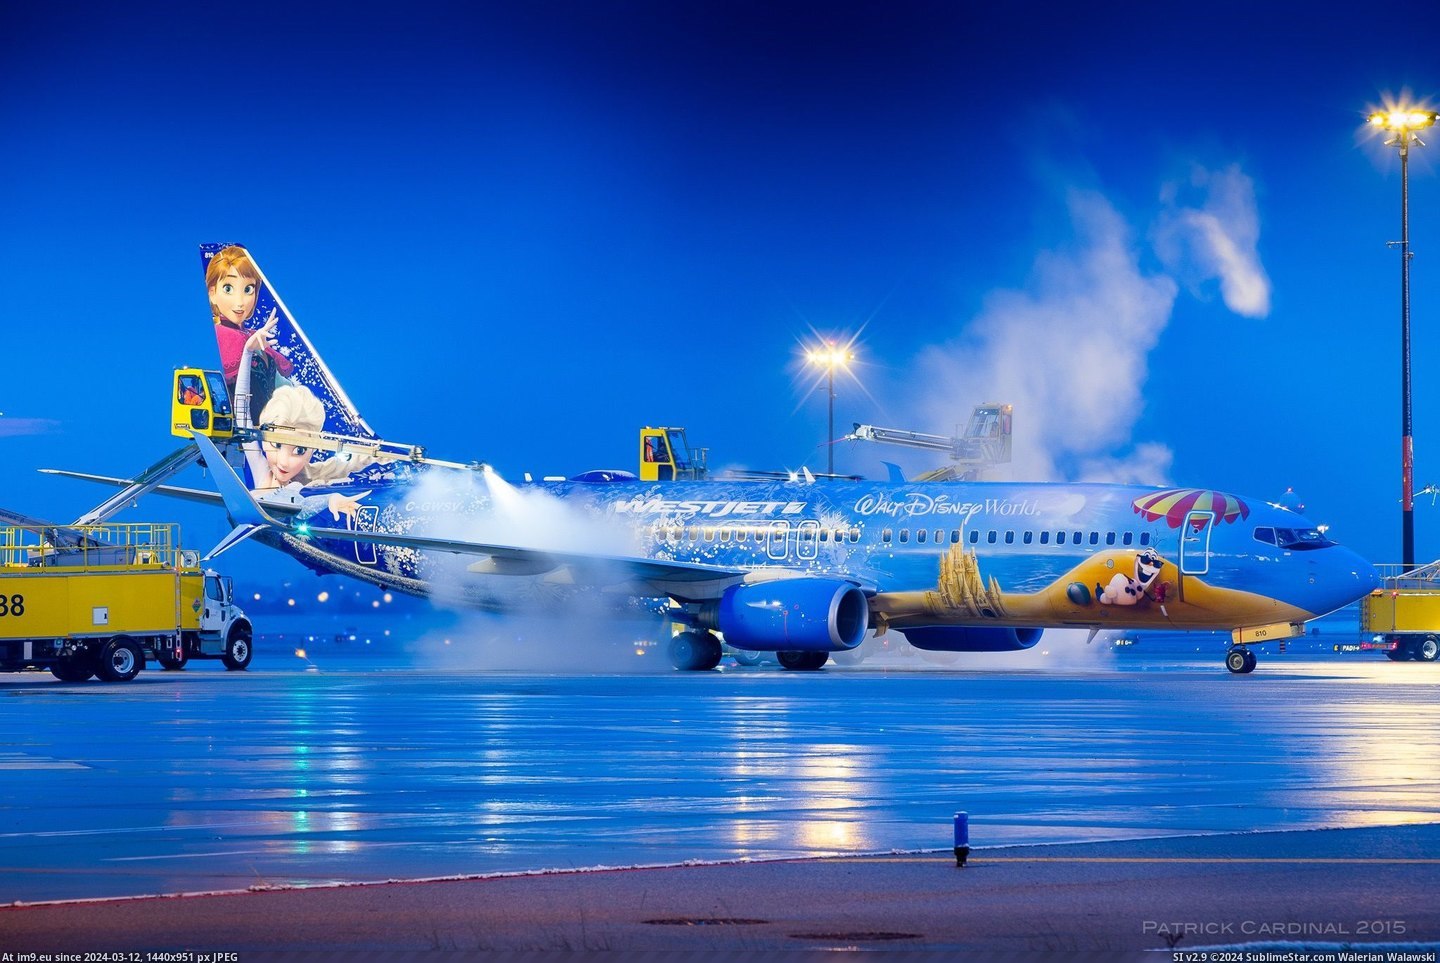 #Frozen #Airport #Crews #Plane #Ground [Pics] Airport ground crews de-icing a Frozen plane Pic. (Image of album My r/PICS favs))